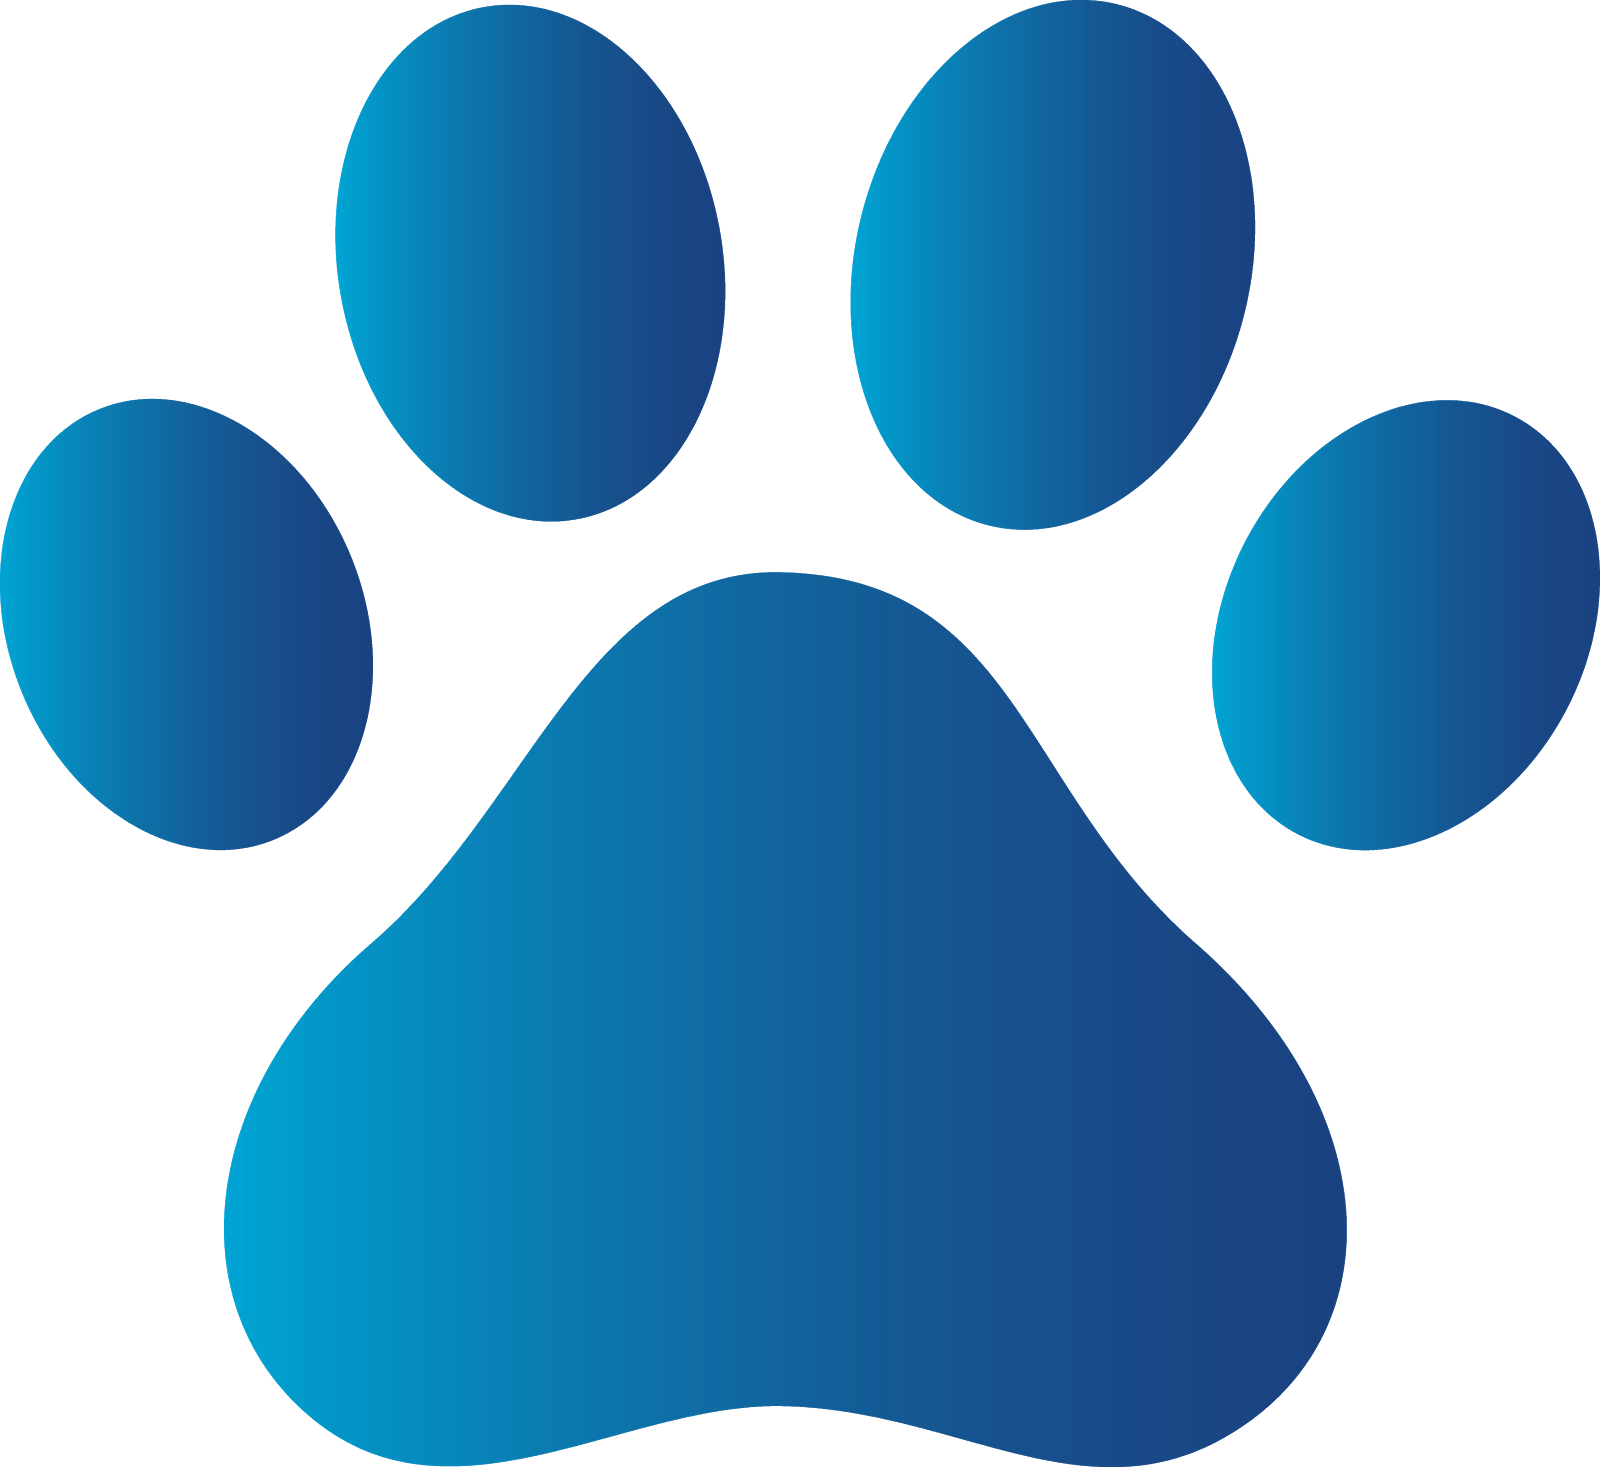 Blue Paw Logo - Paw print Logos